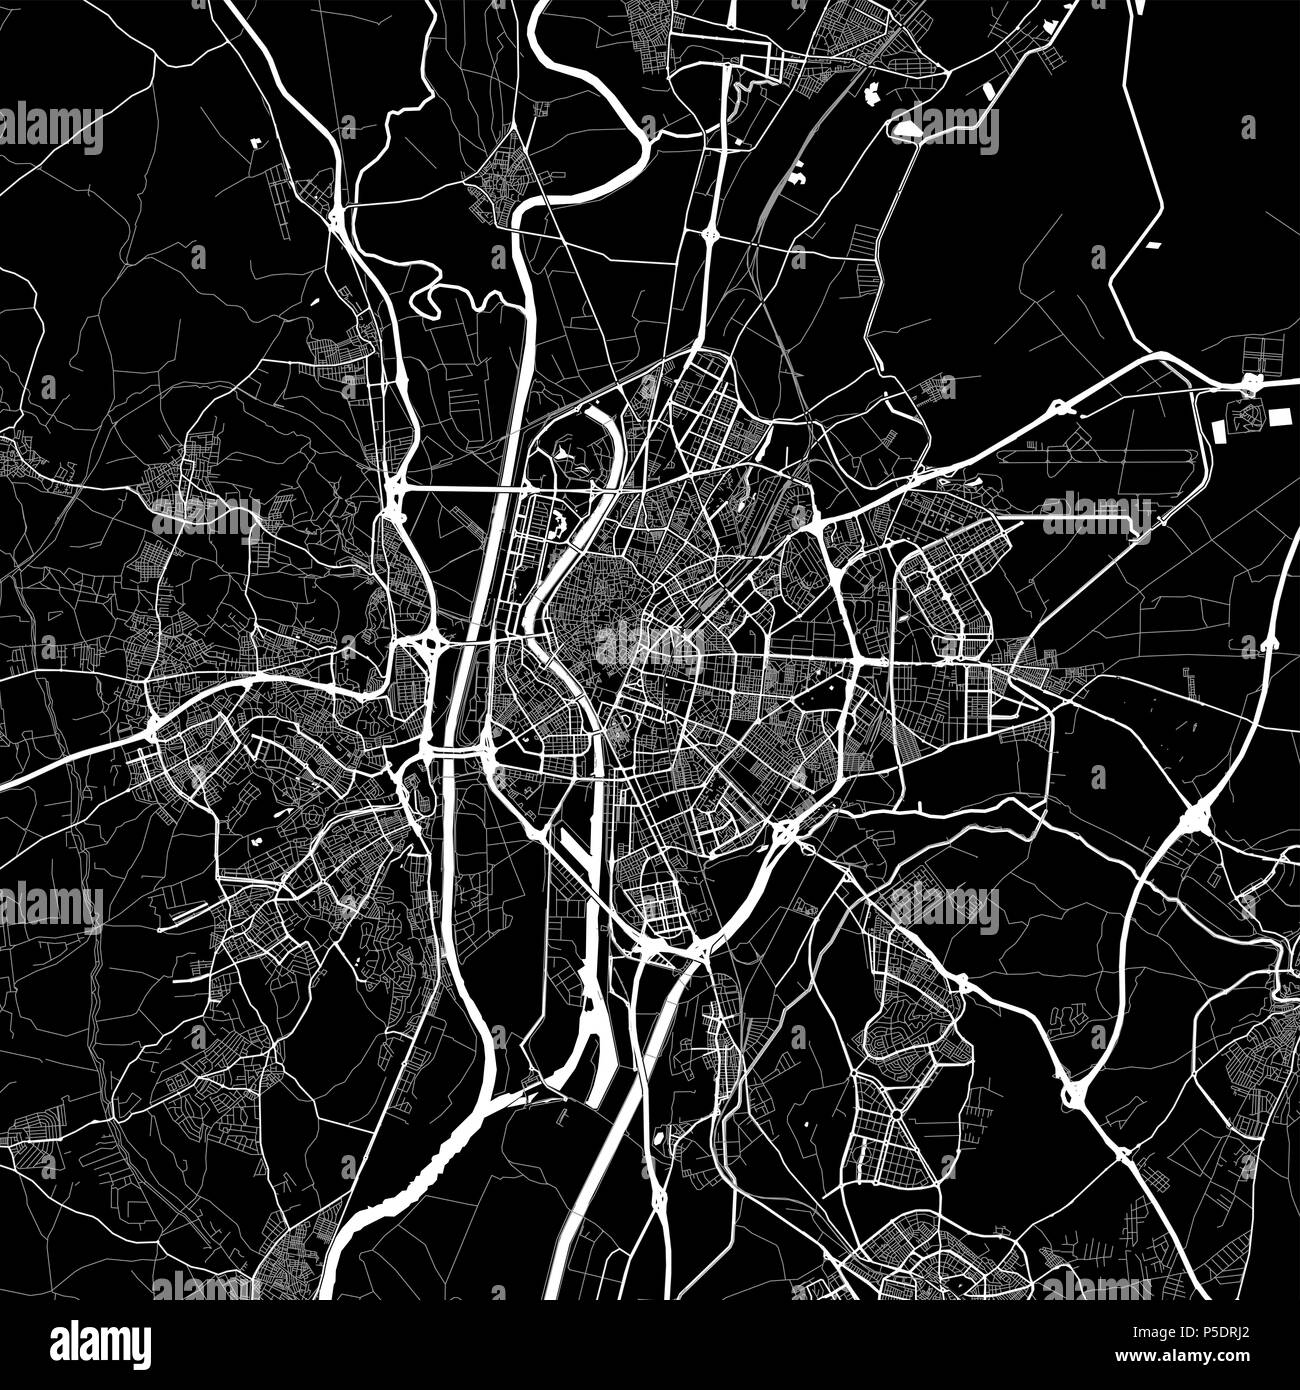 Mapa de la zona de Sevilla, España. Fondo oscuro versión para infografía y proyectos de comercialización. Este mapa de Sevilla contiene hitos típicos con street Foto de stock